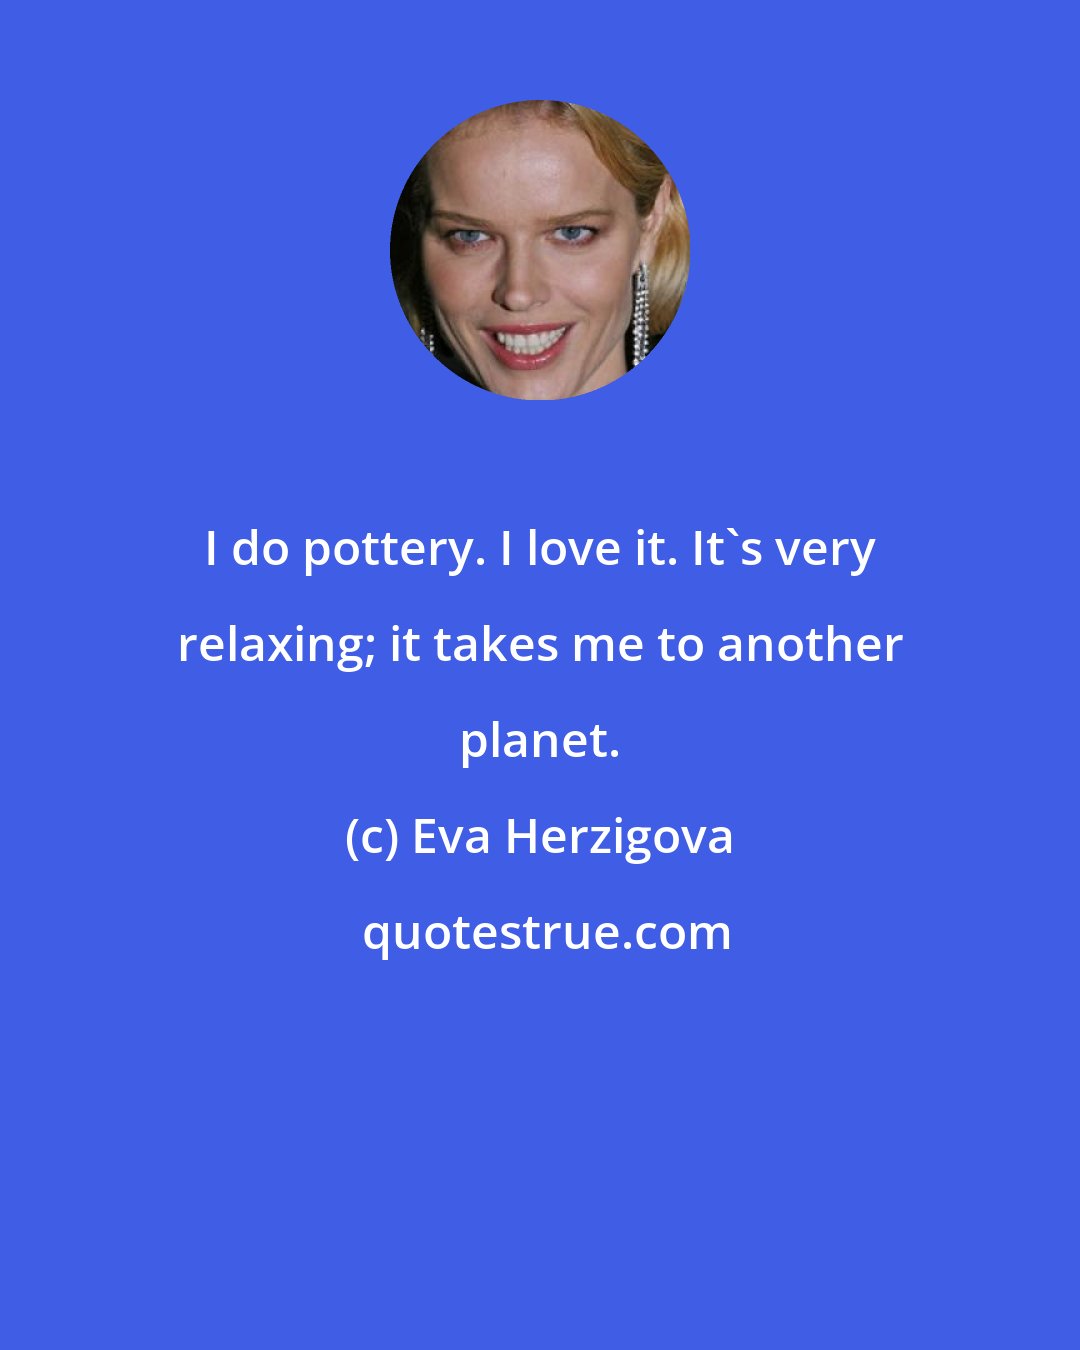 Eva Herzigova: I do pottery. I love it. It's very relaxing; it takes me to another planet.